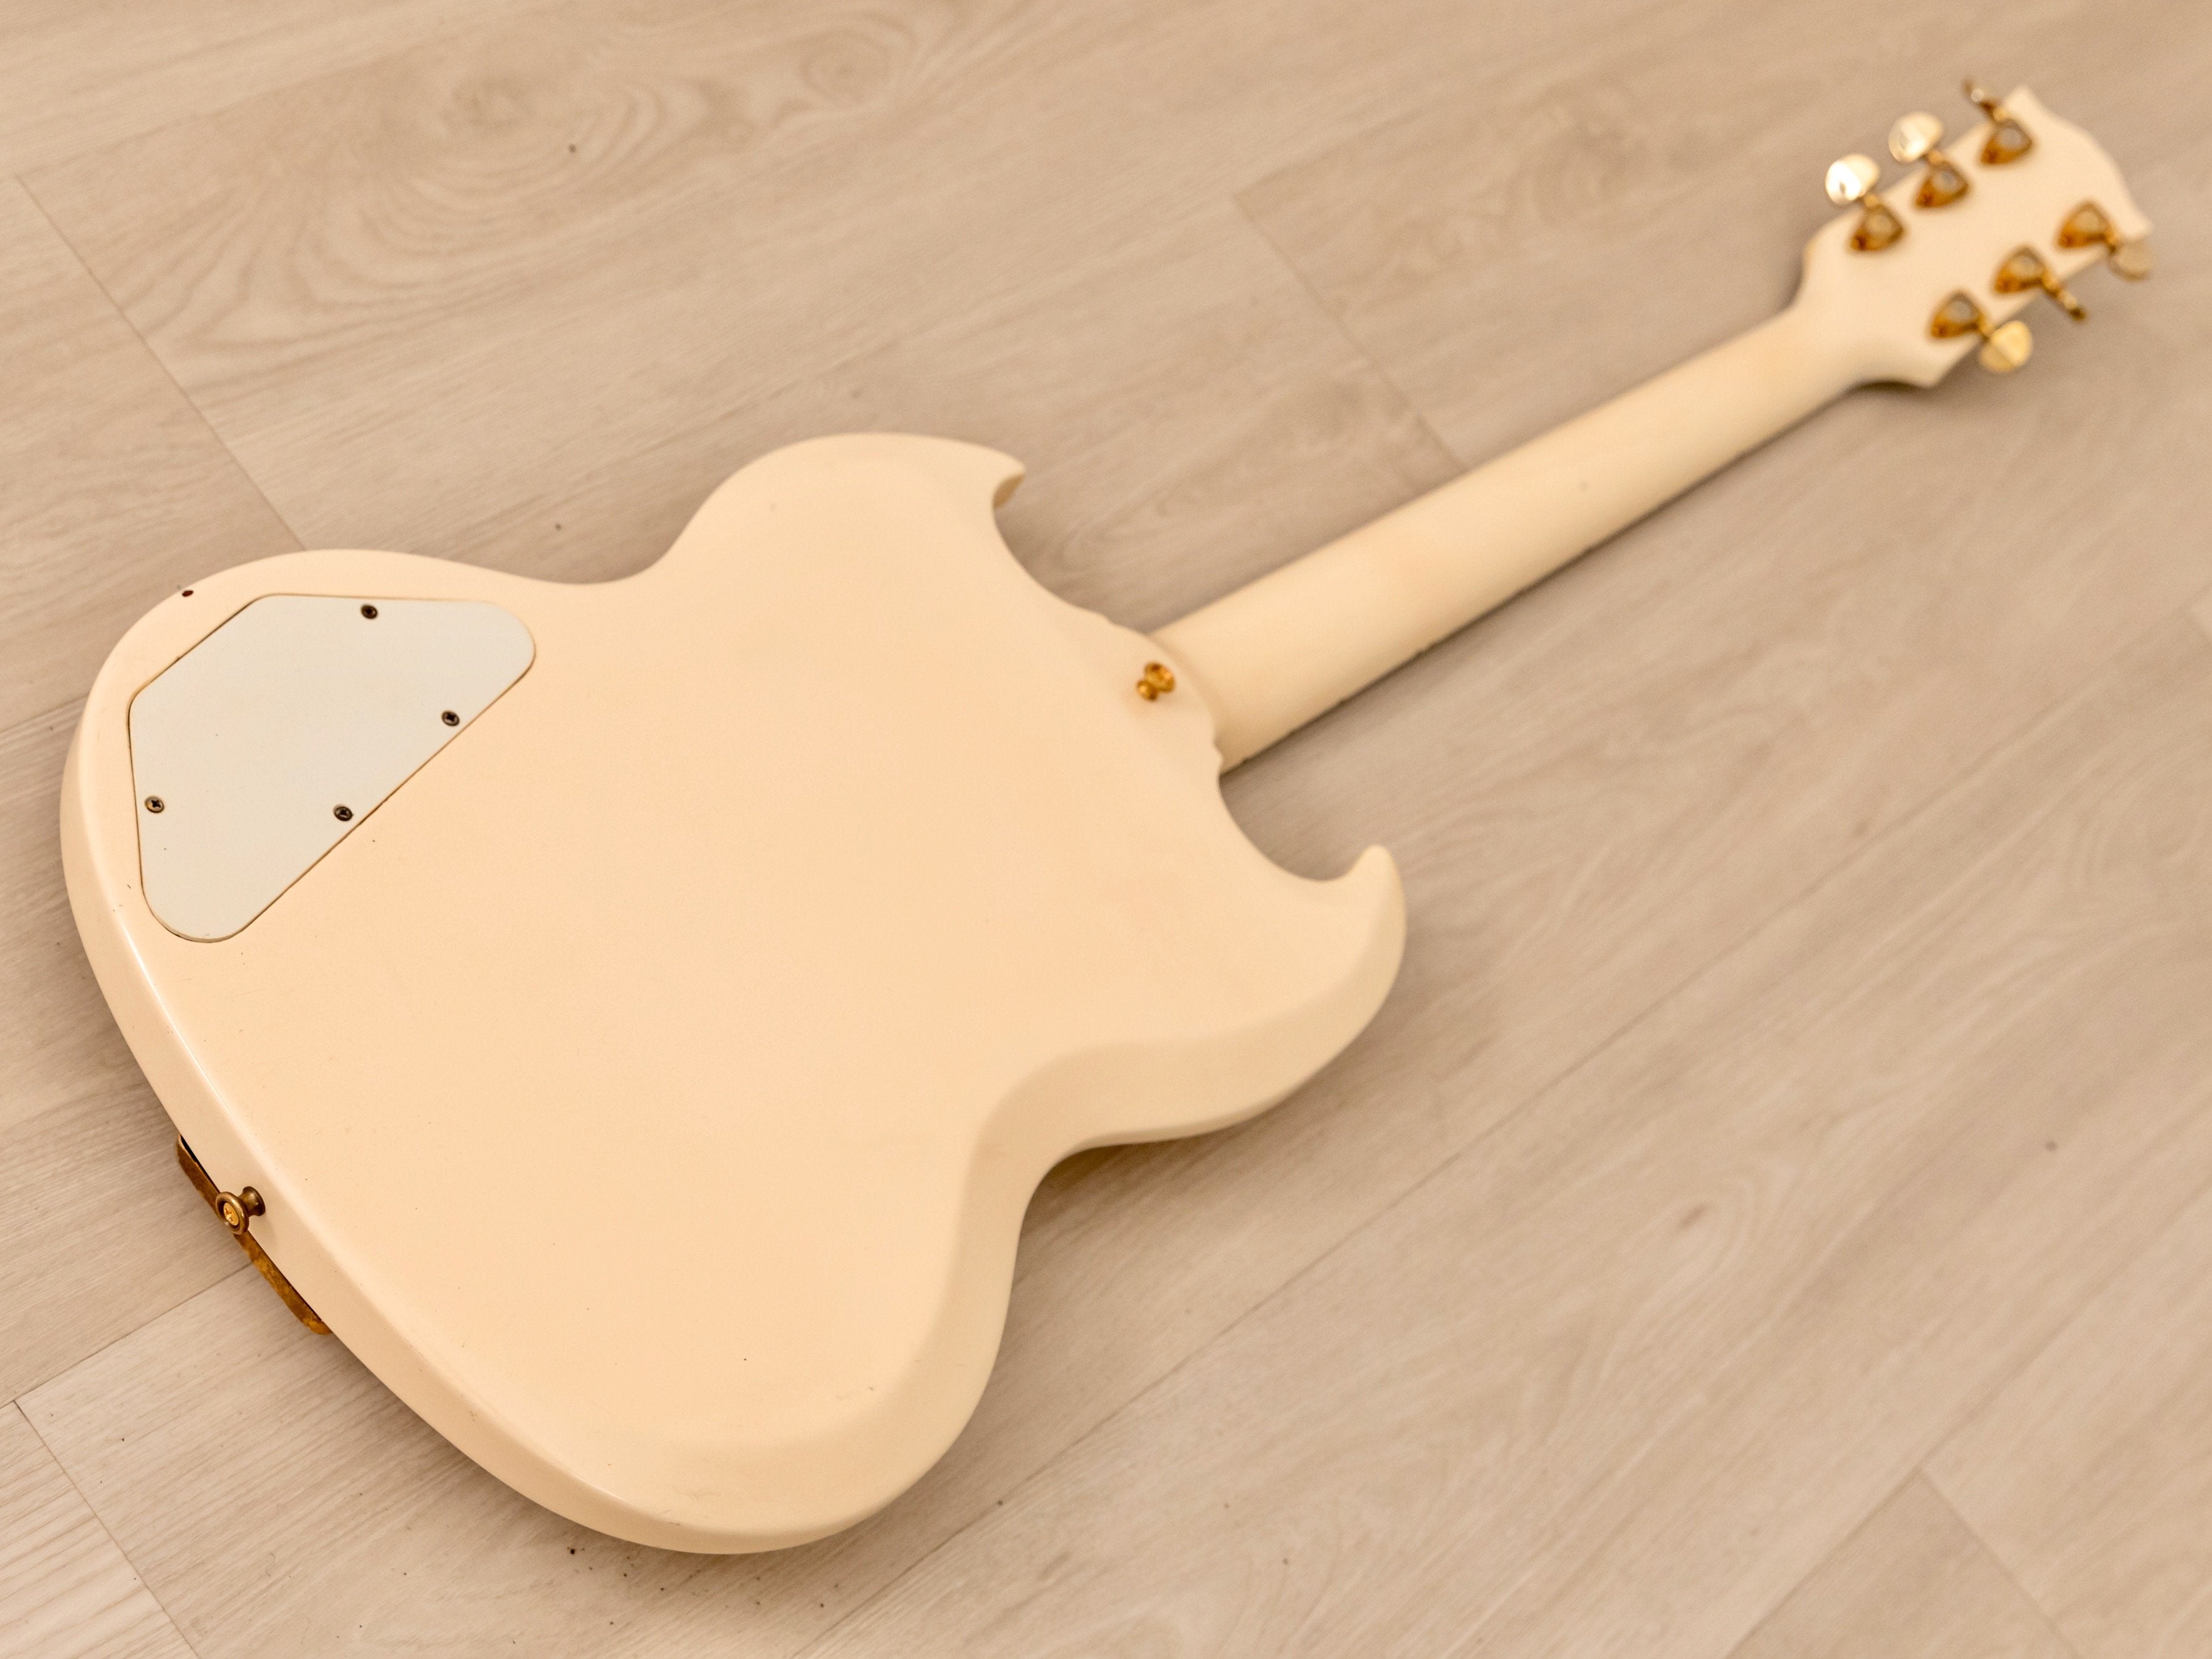 1961 Gibson Les Paul Custom SG Polaris White w/ PAF Pickups, Lifton Case